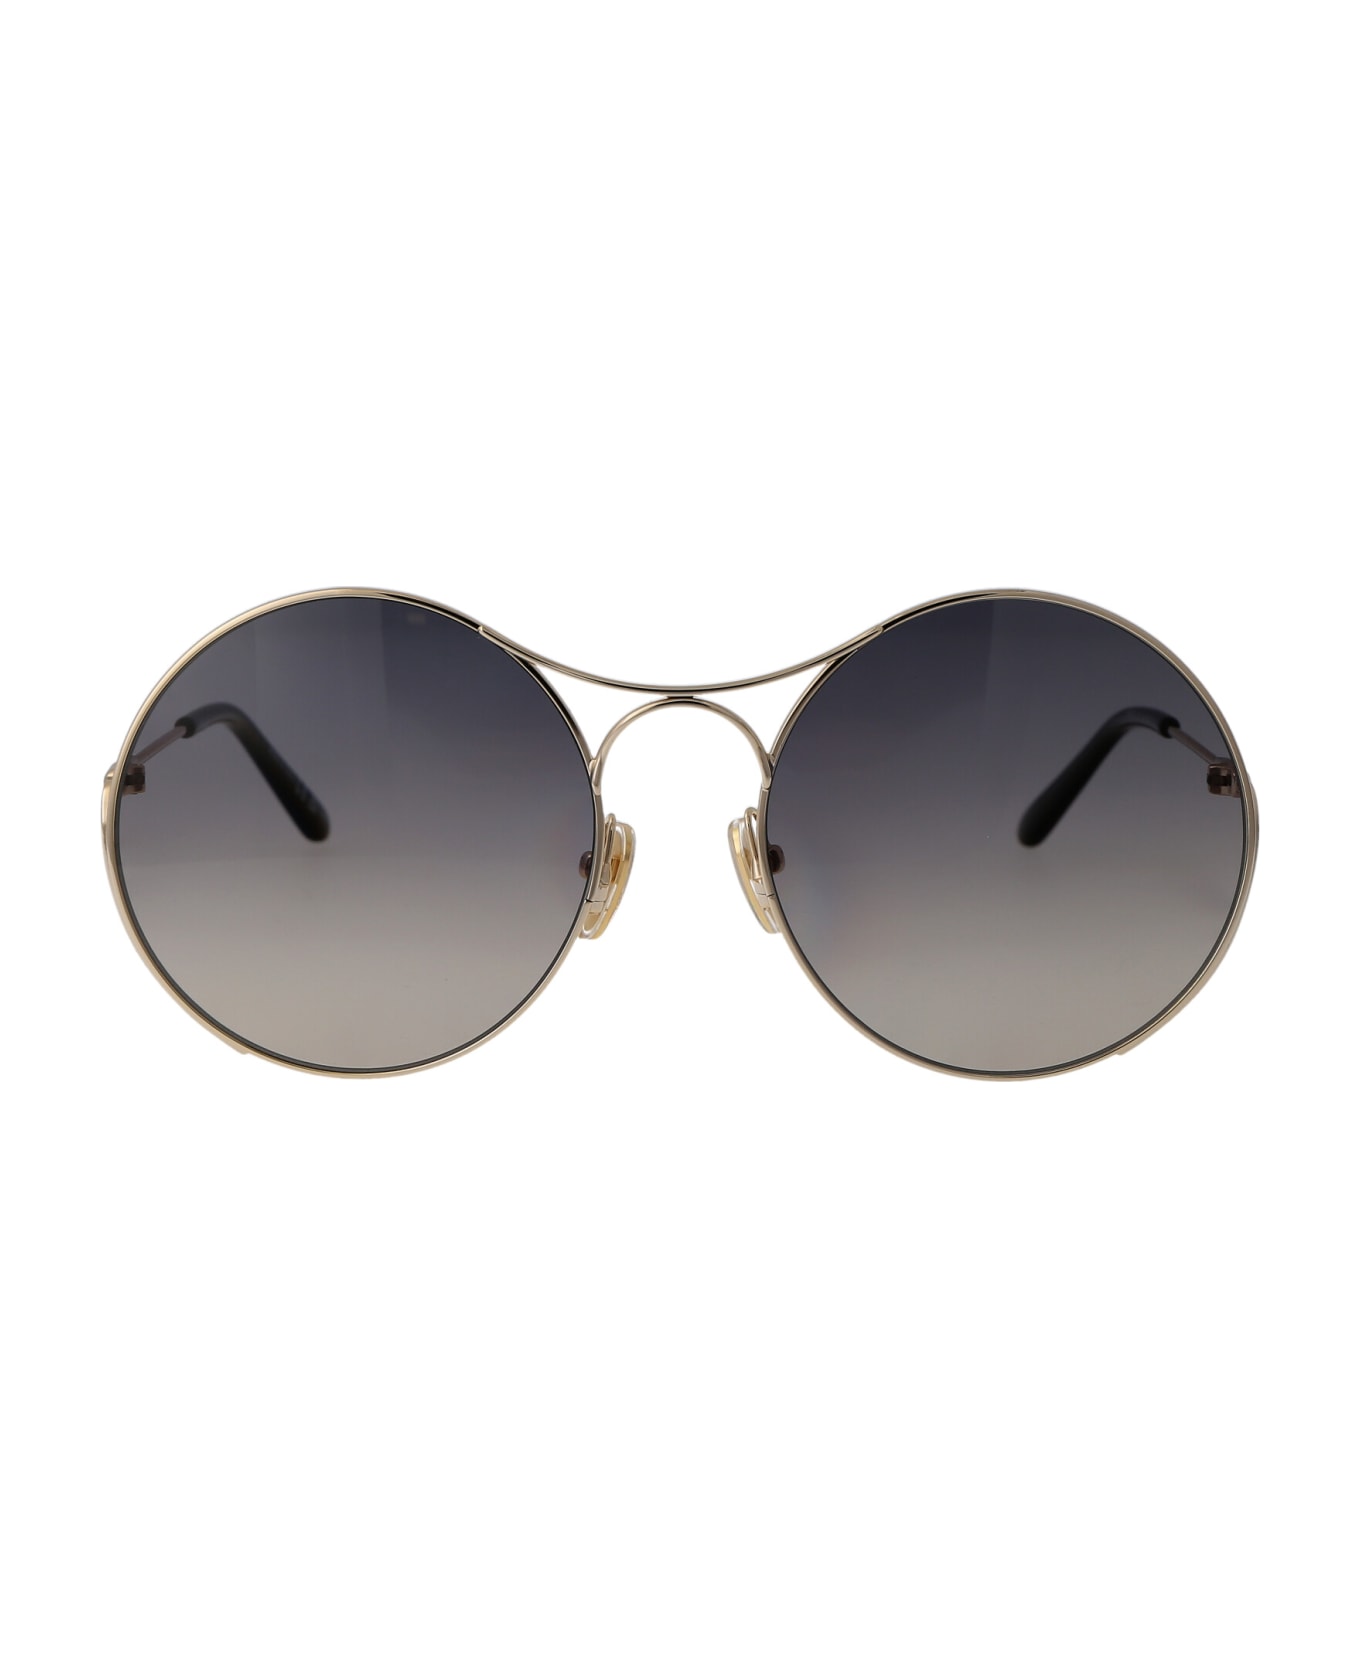 Chloé Eyewear Ch0166s Sunglasses - 001 GOLD GOLD GREY サングラス